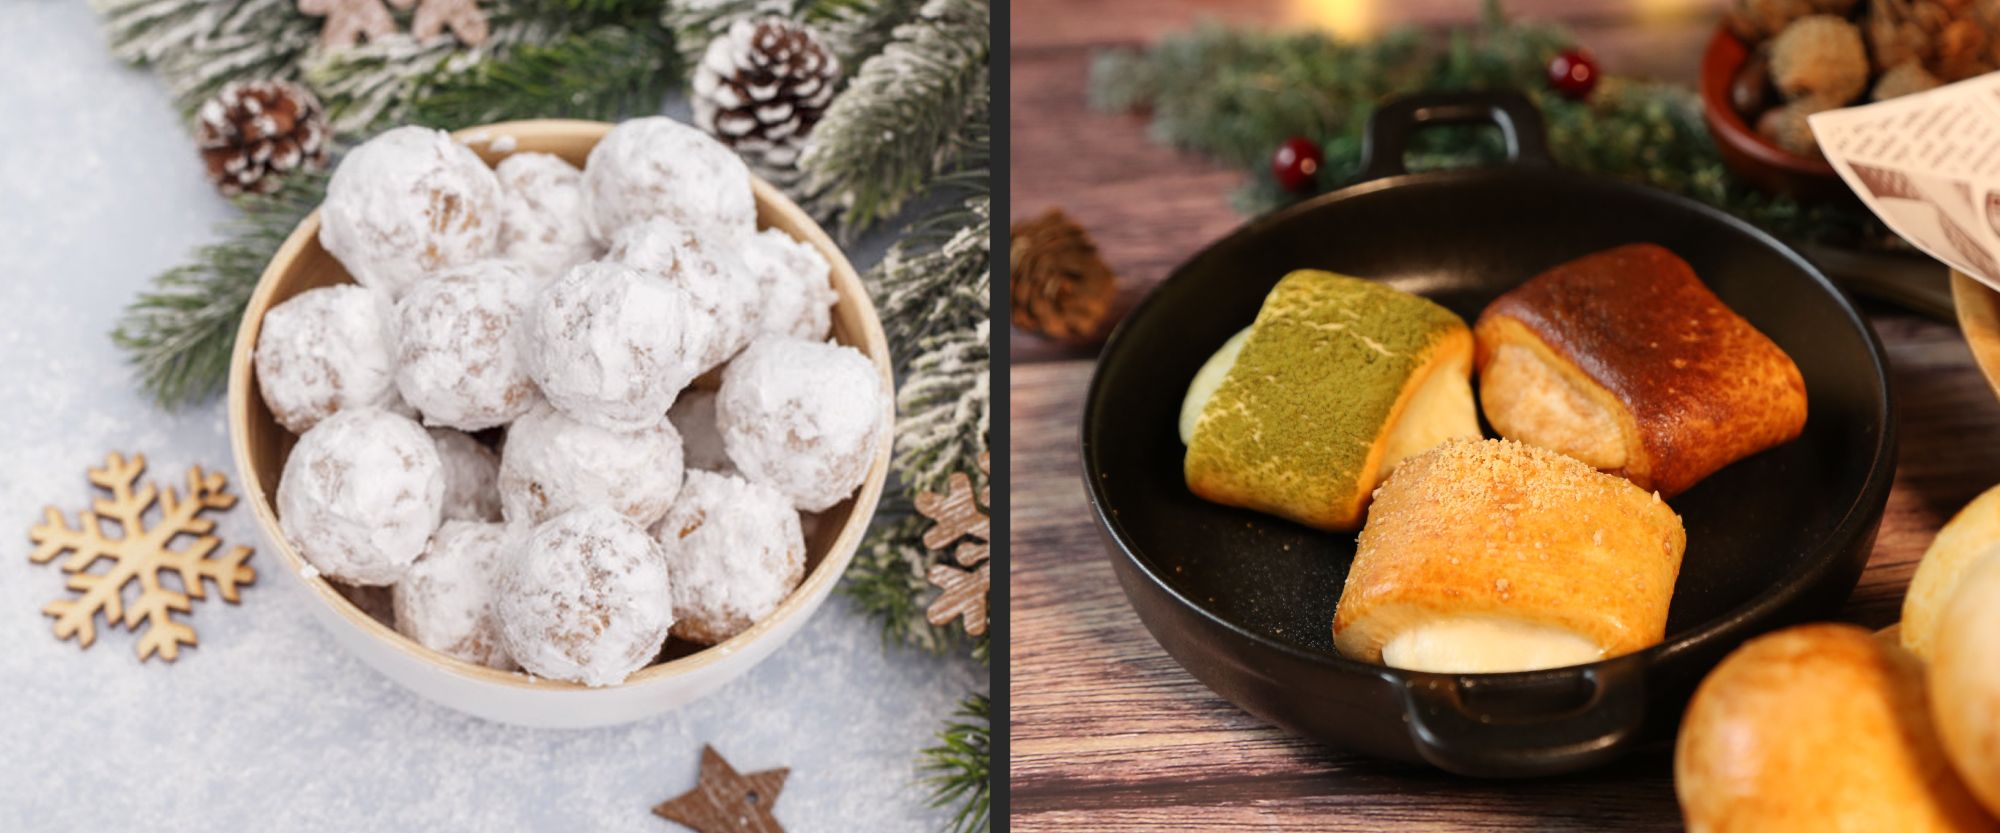 ANKO-Weihnachts-Food-Trends-Keks